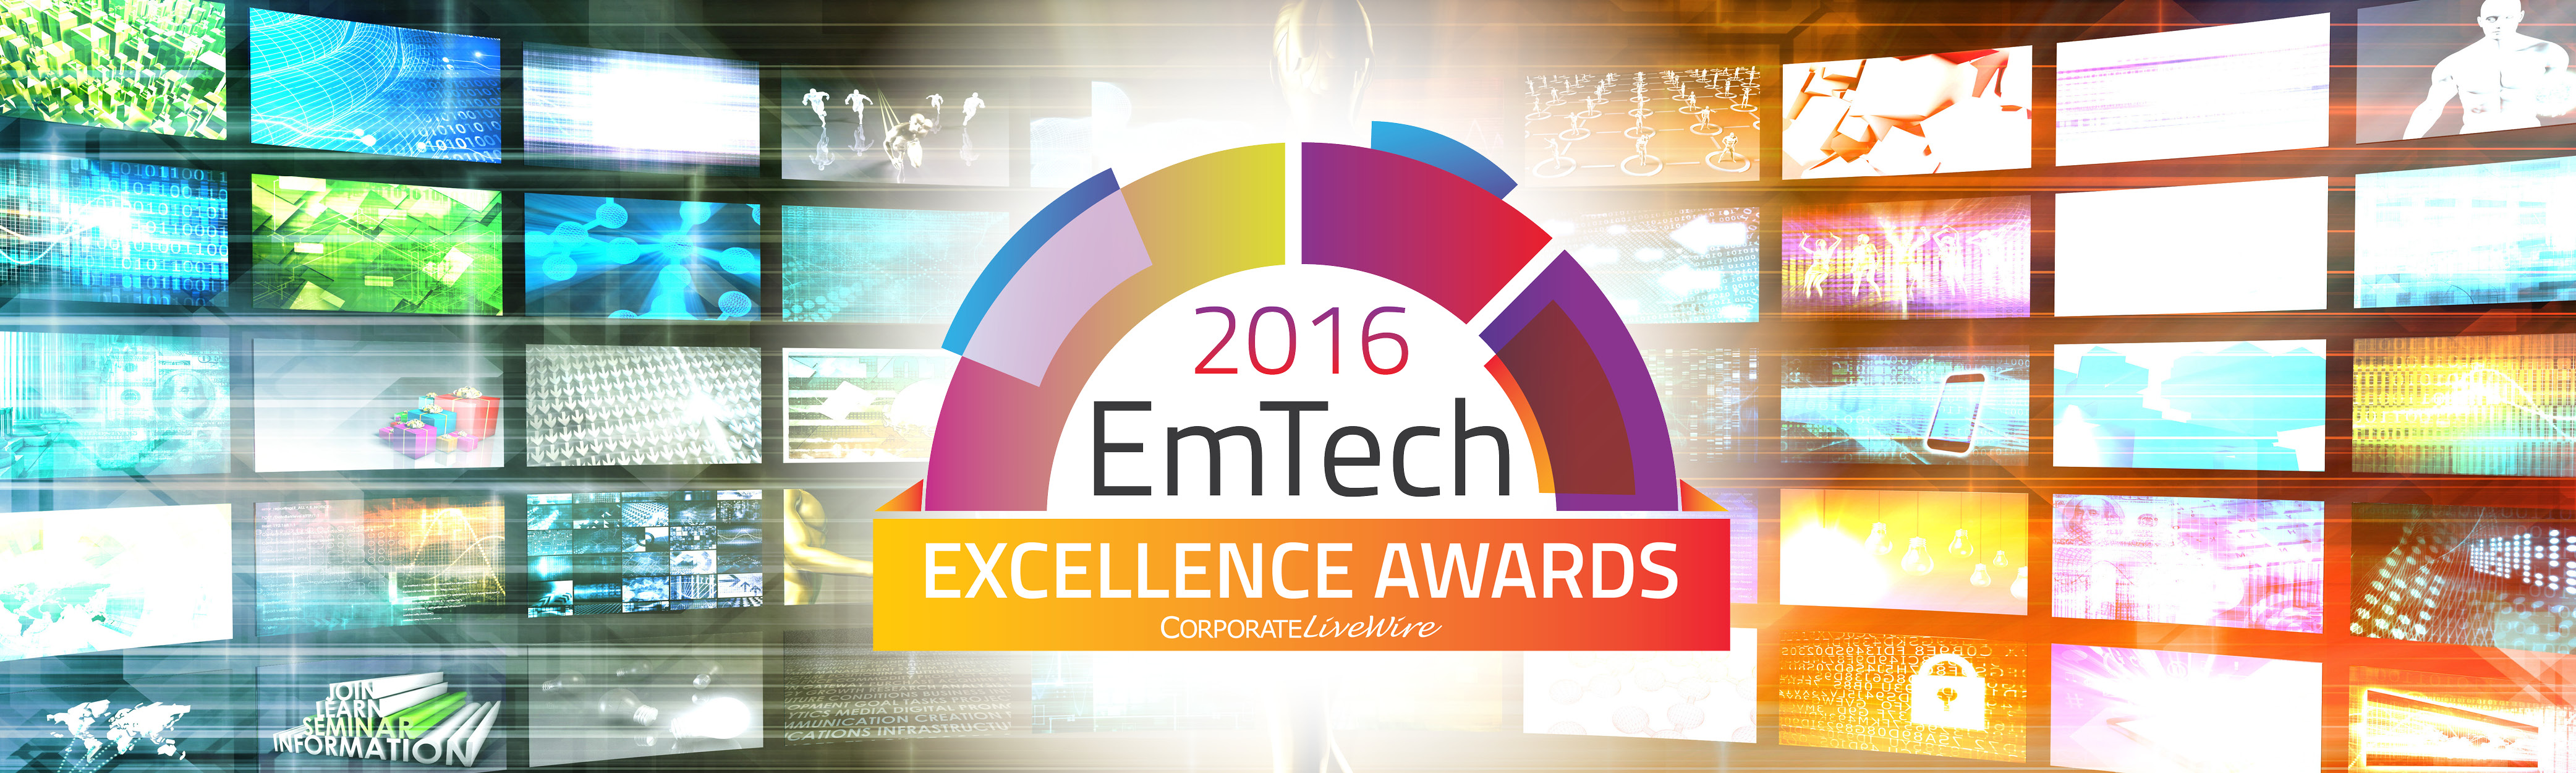 Emerging Technology Awards 2016